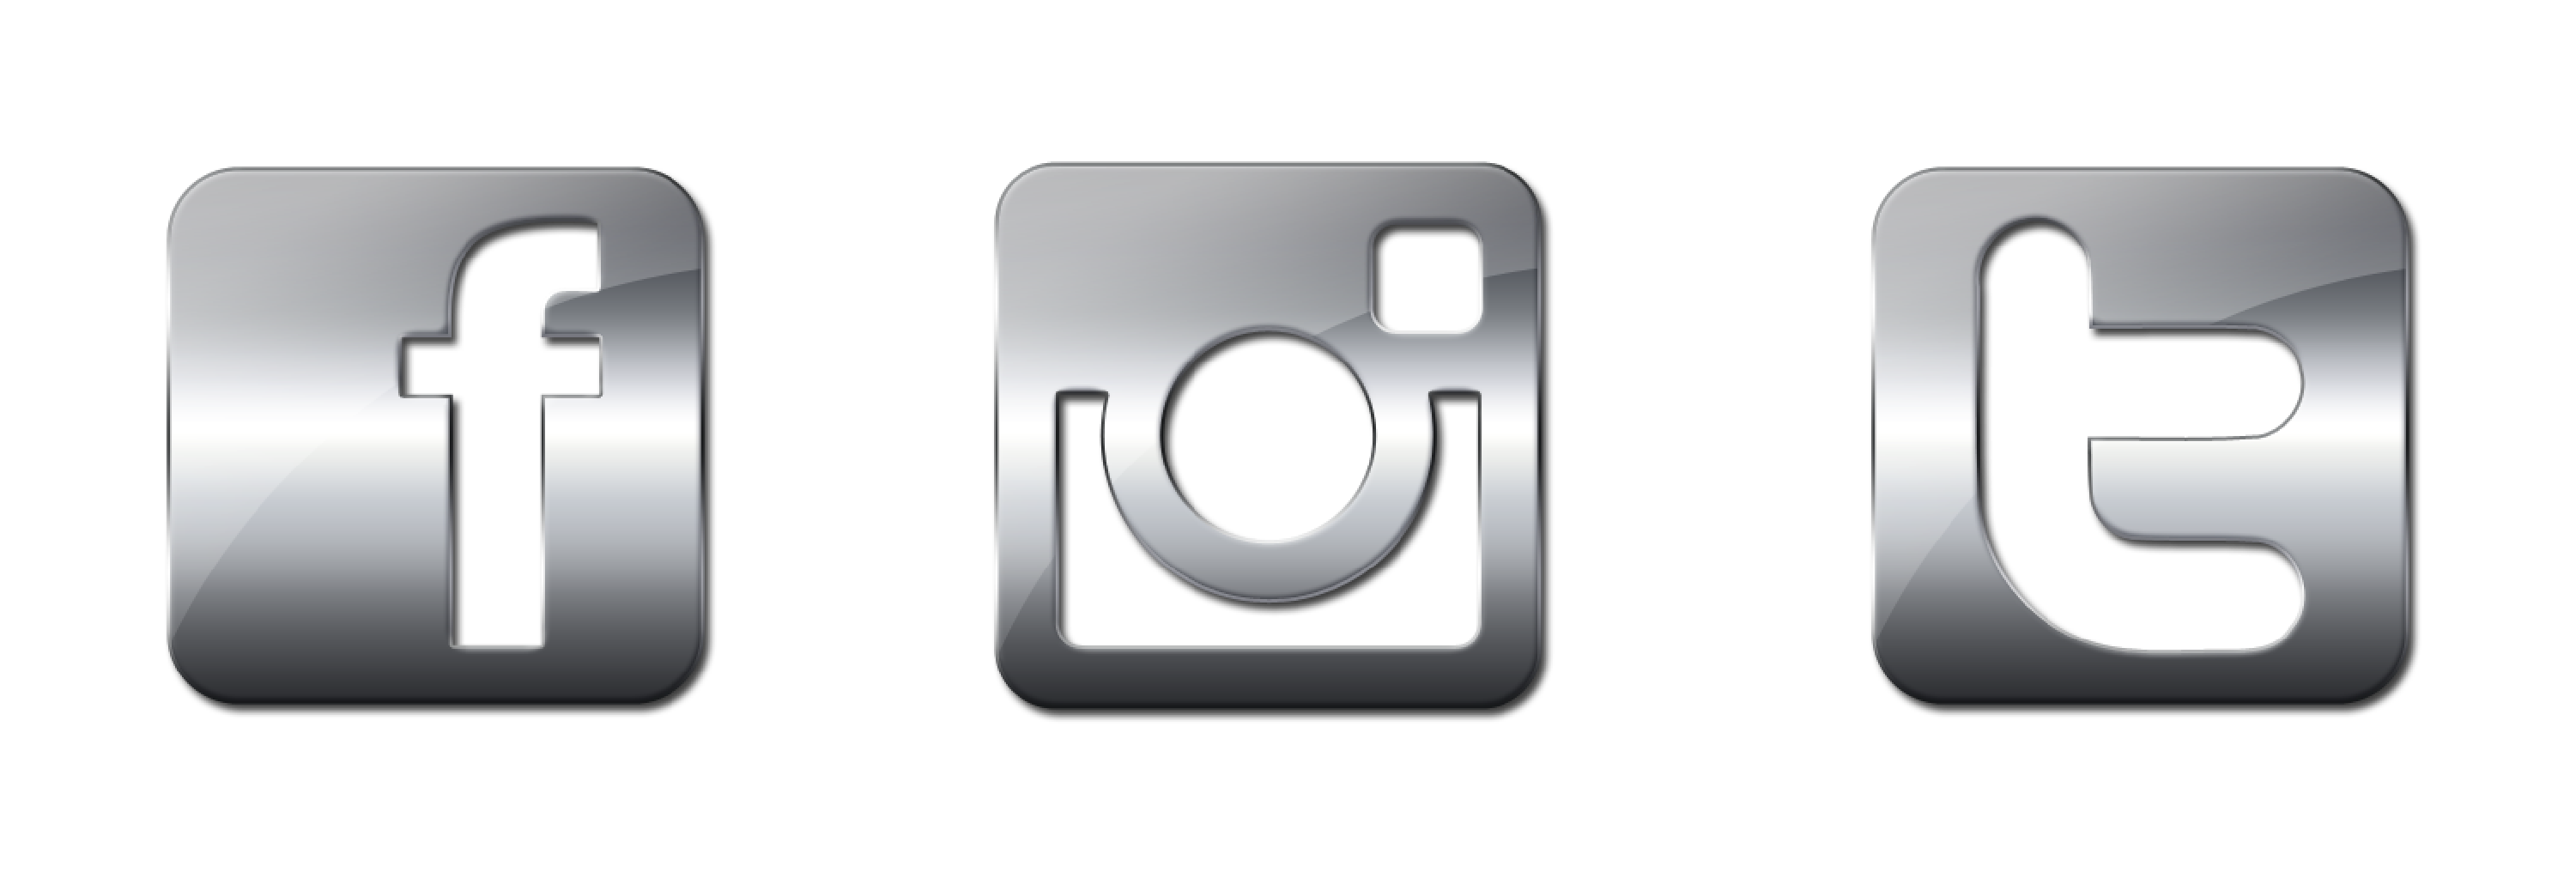 Download Instagram Icons Media Computer Facebook Social Logo HQ PNG Image |  FreePNGImg